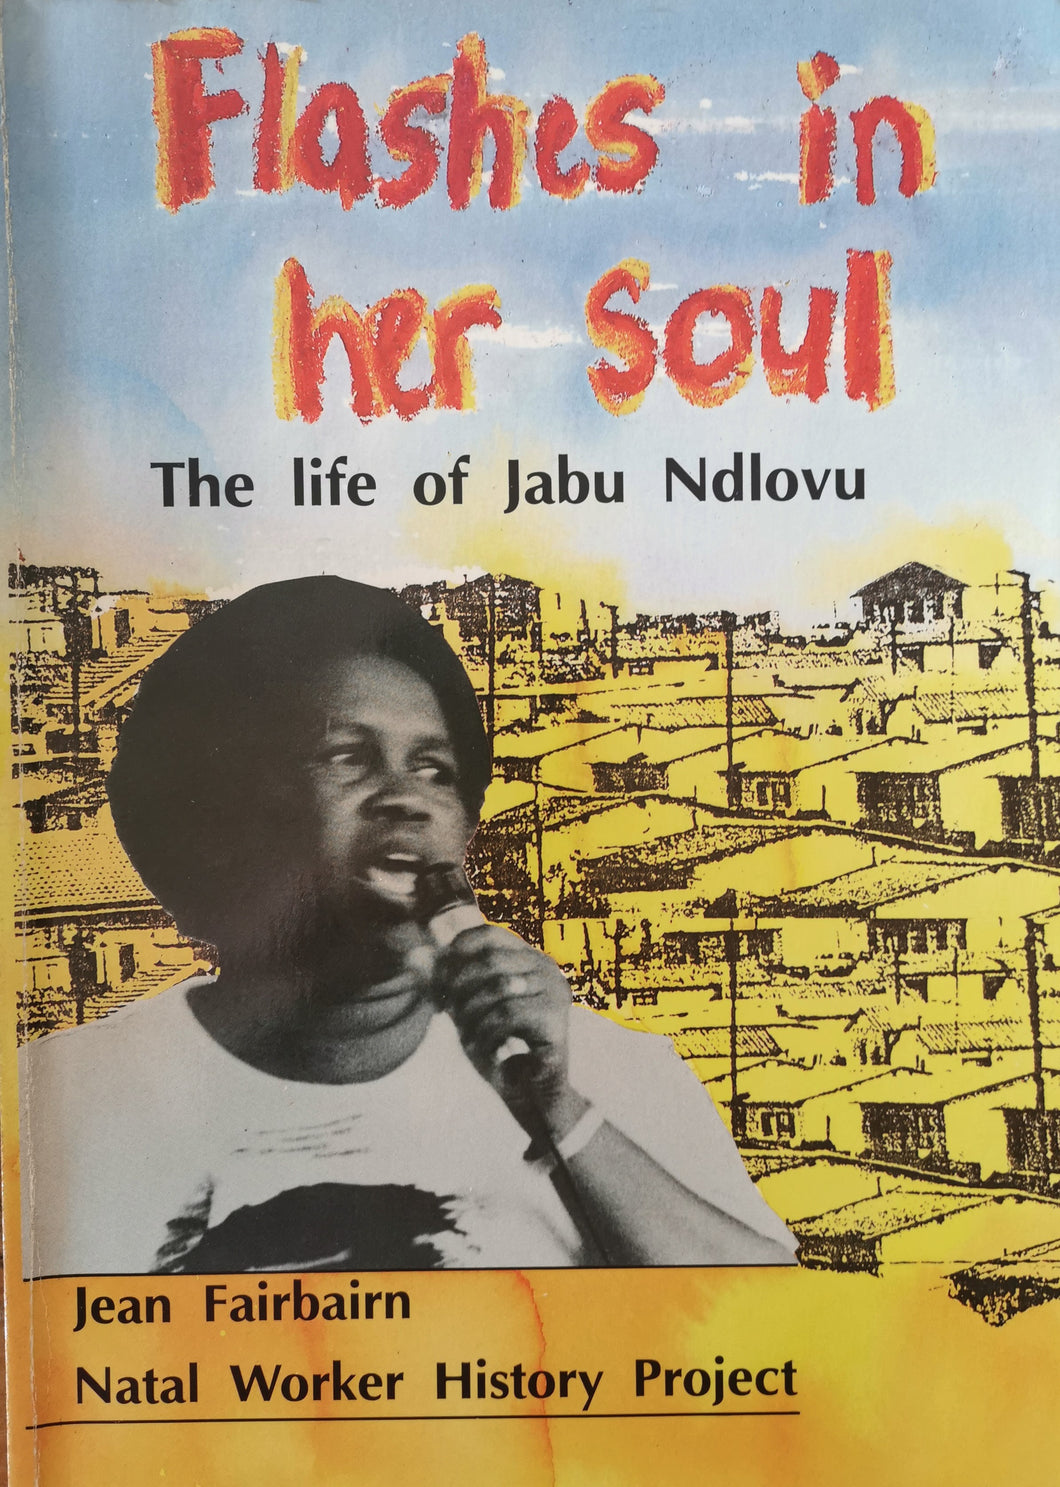 Flashes in her Soul: The Life of Jabu Ndlovu by Jean Fairbairn